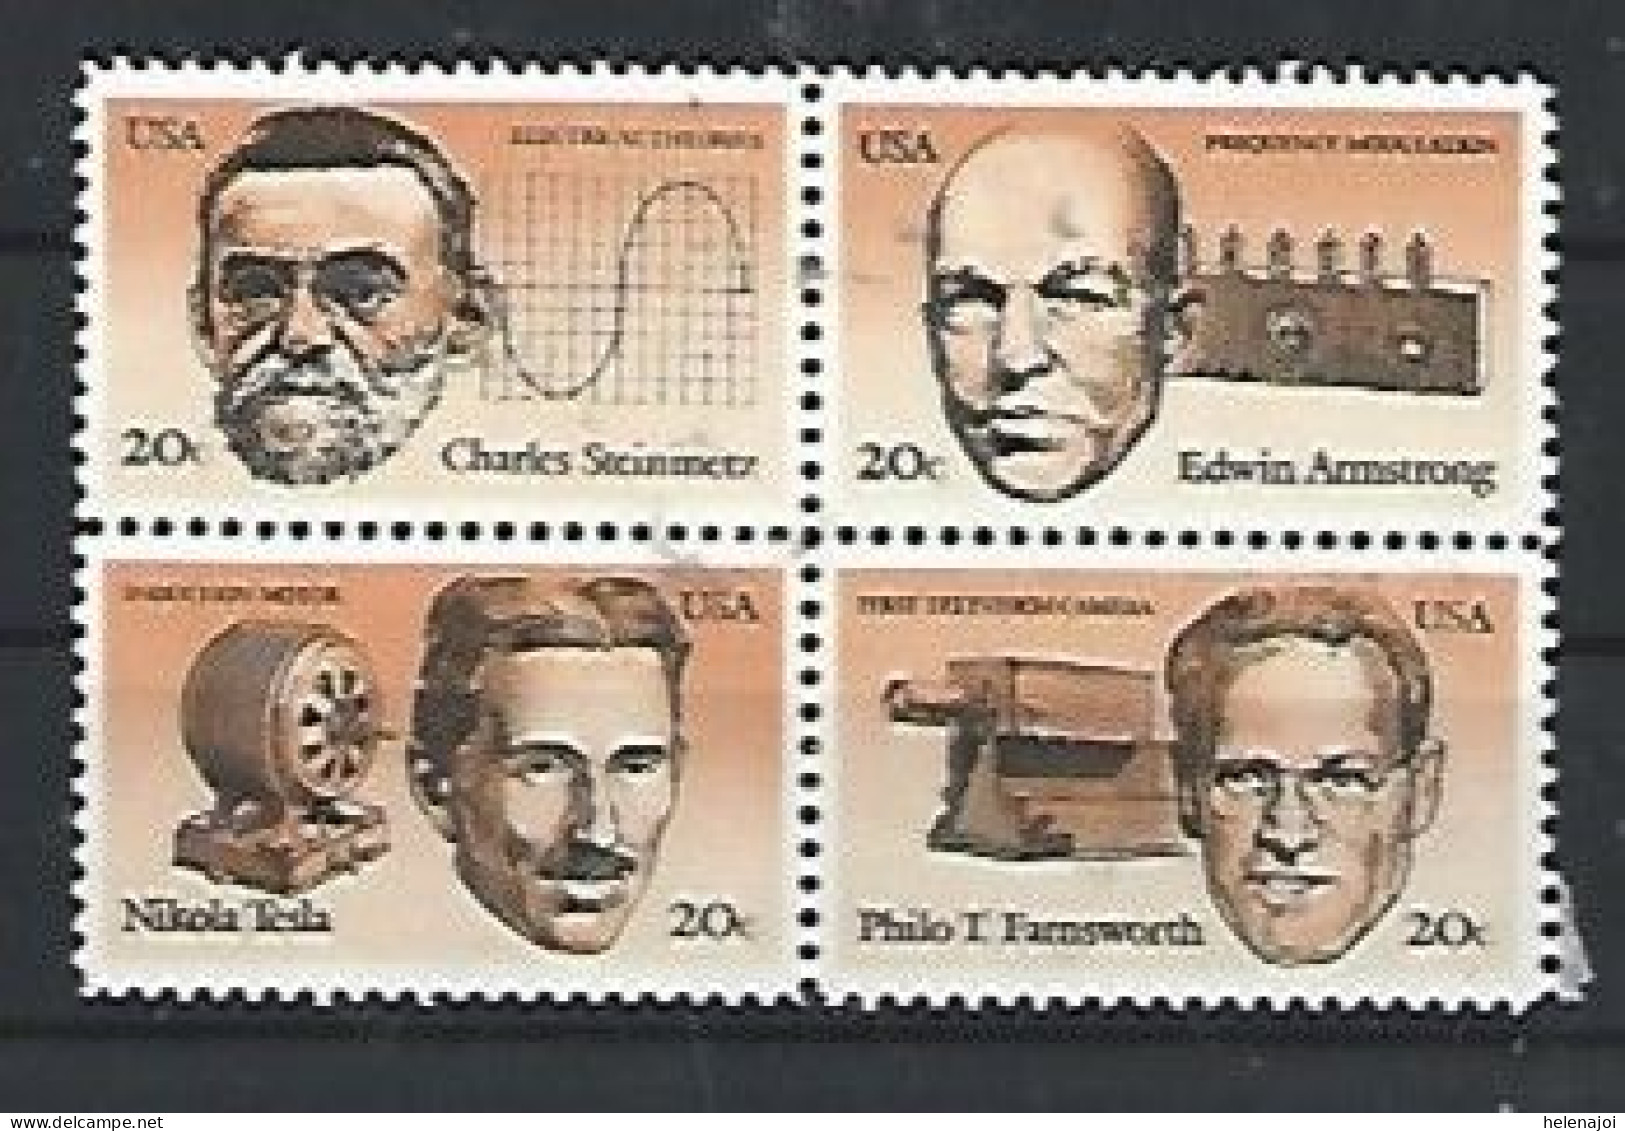 Inventeurs Américains - Unused Stamps